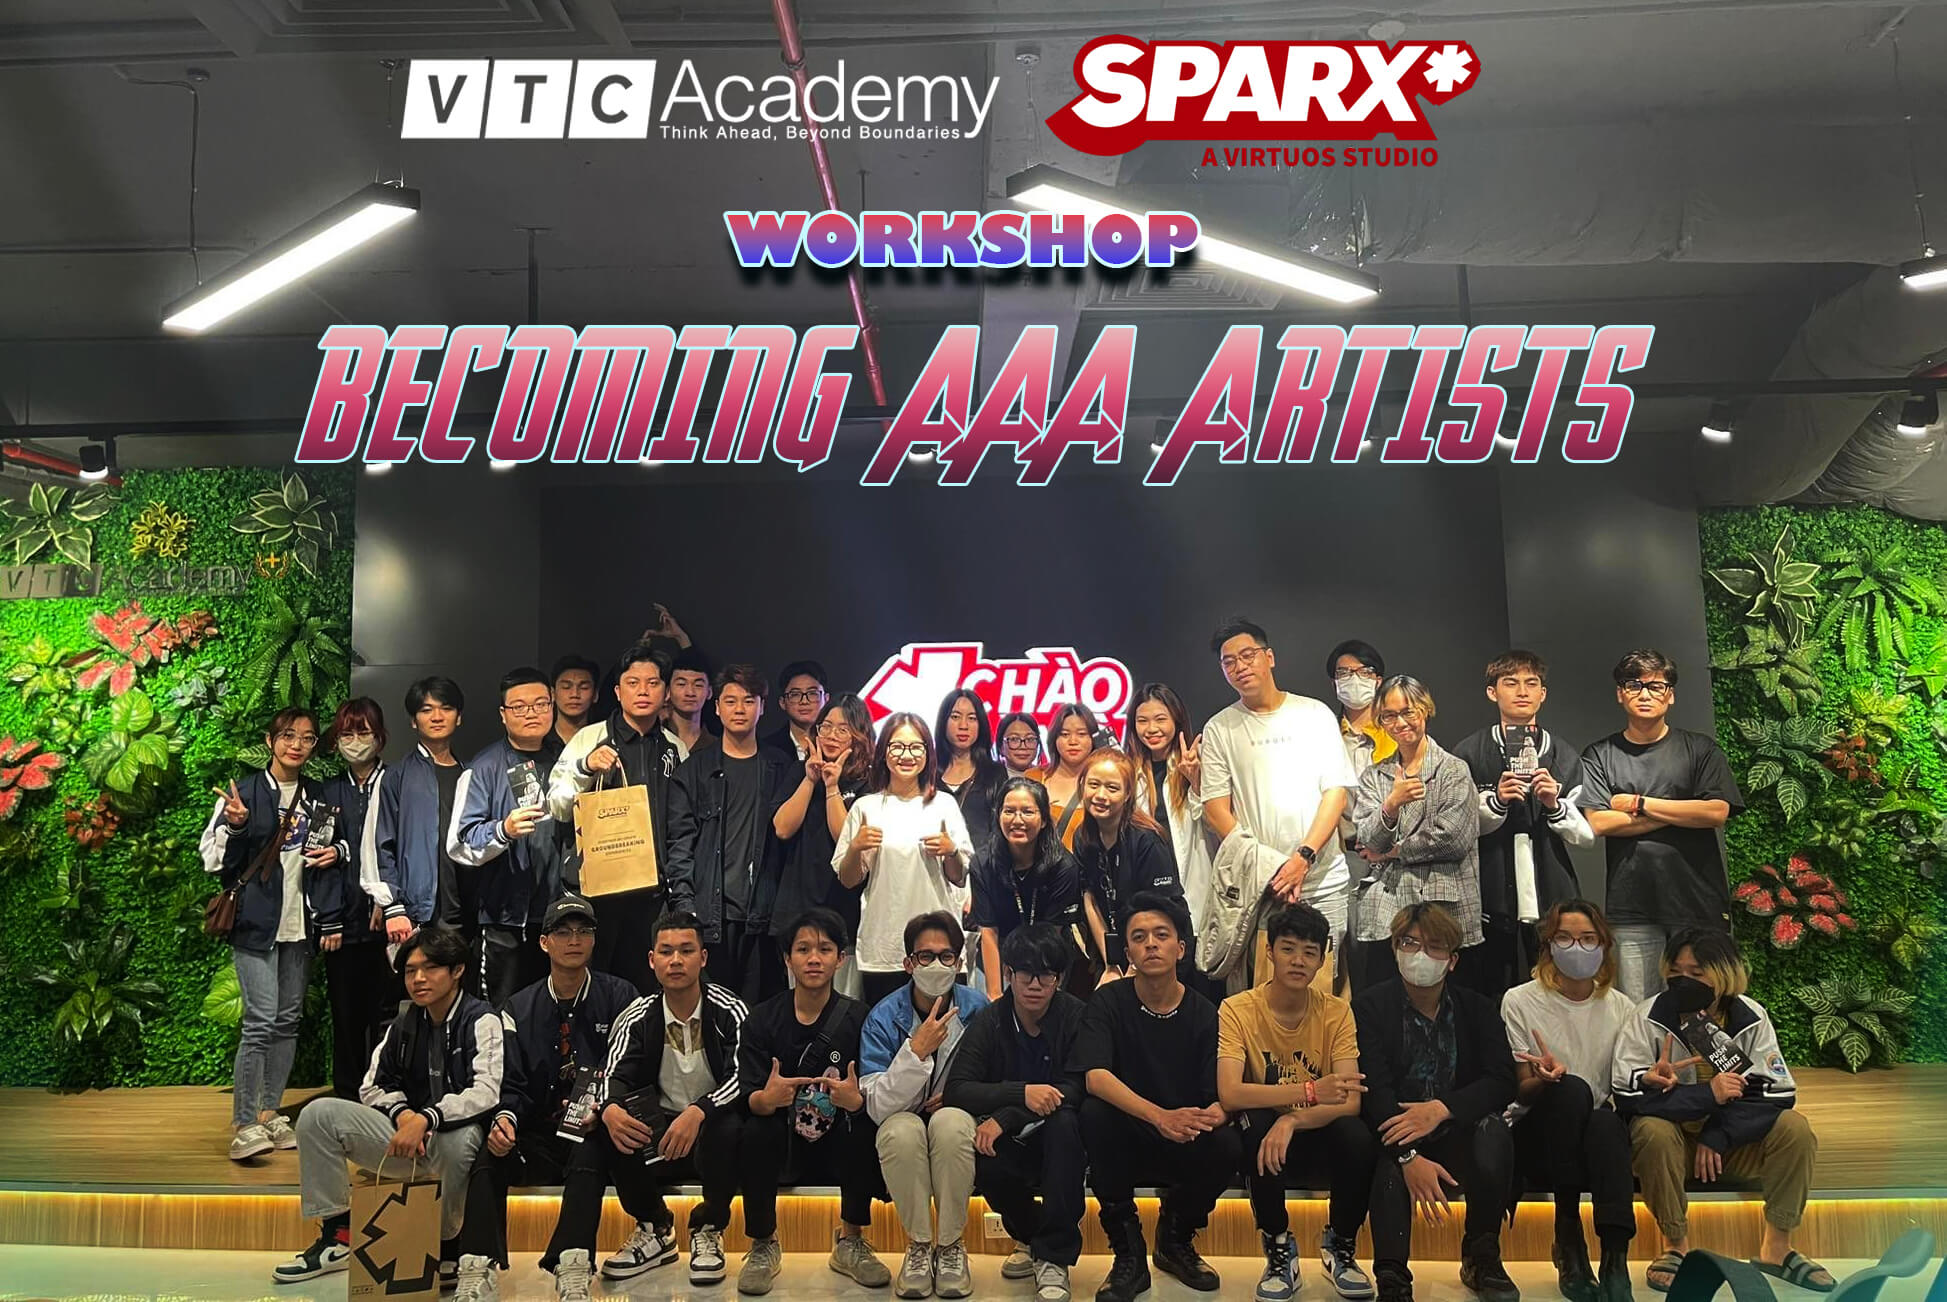 VTC Academy X Sparx*: Workshop 